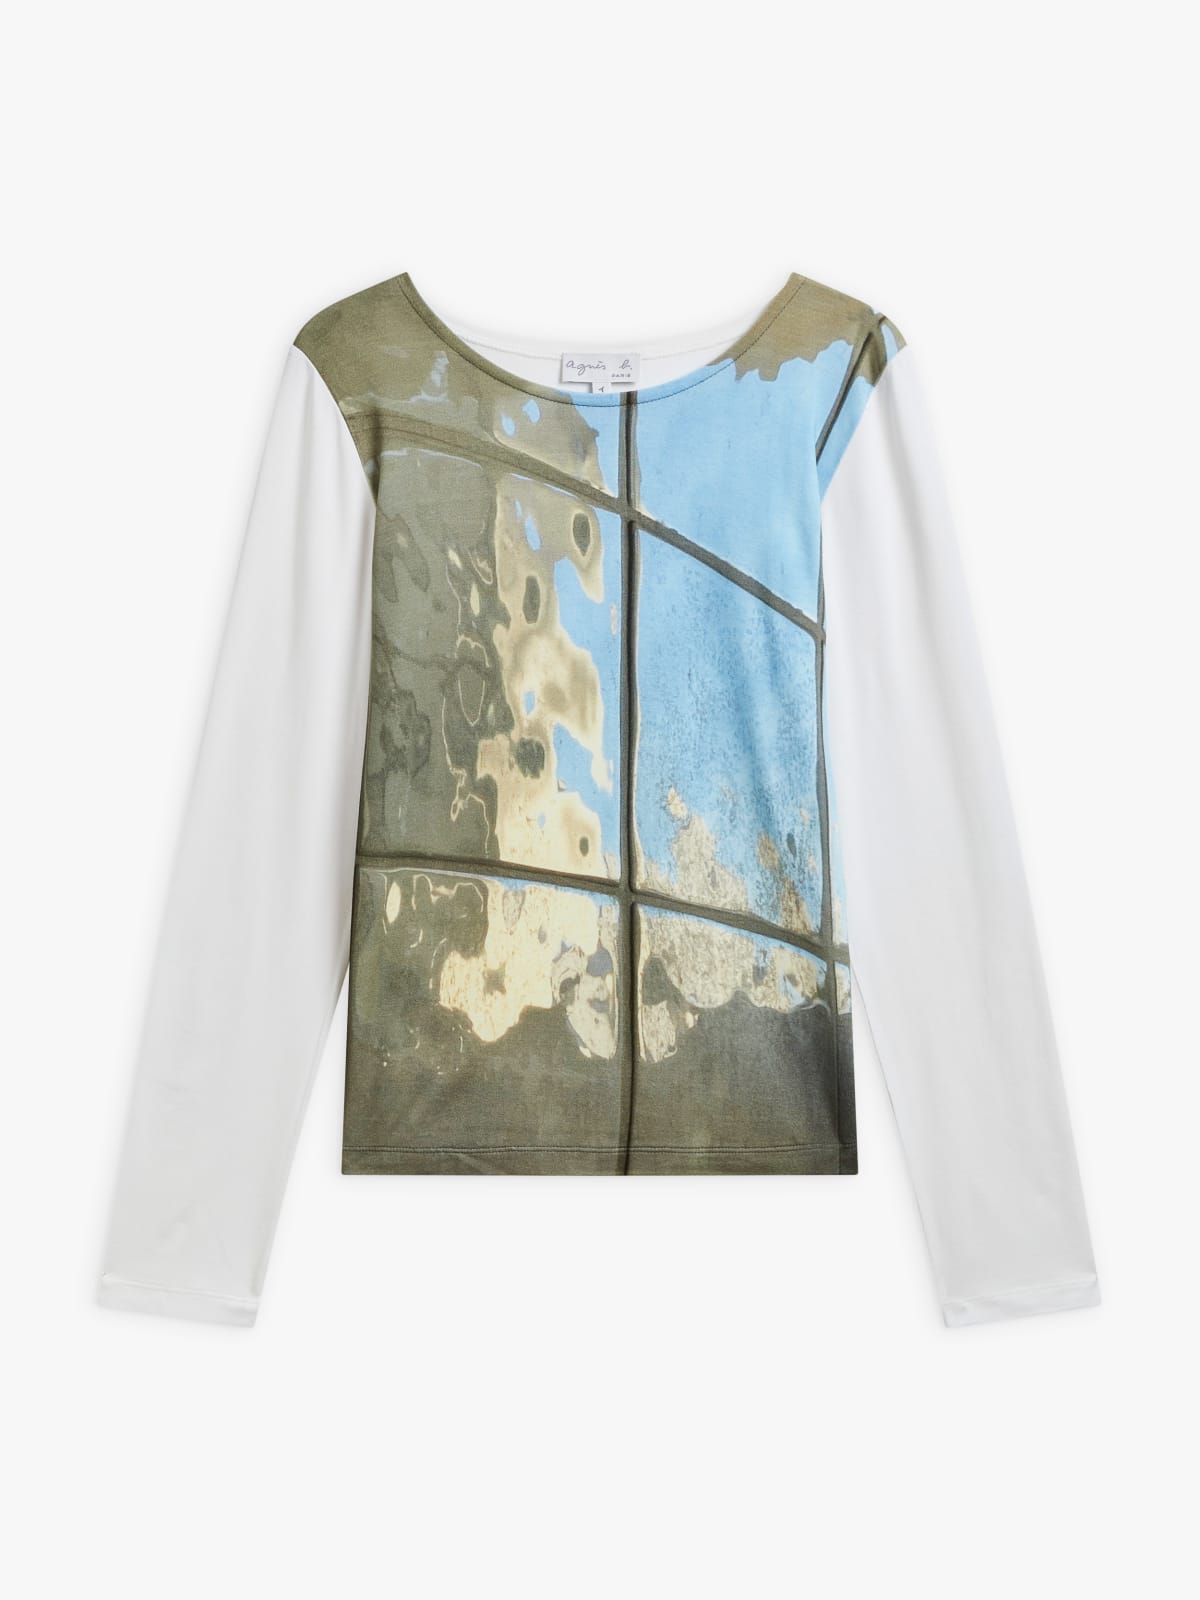  digital print "Carrelage" ("tiles") Martin t-shirt